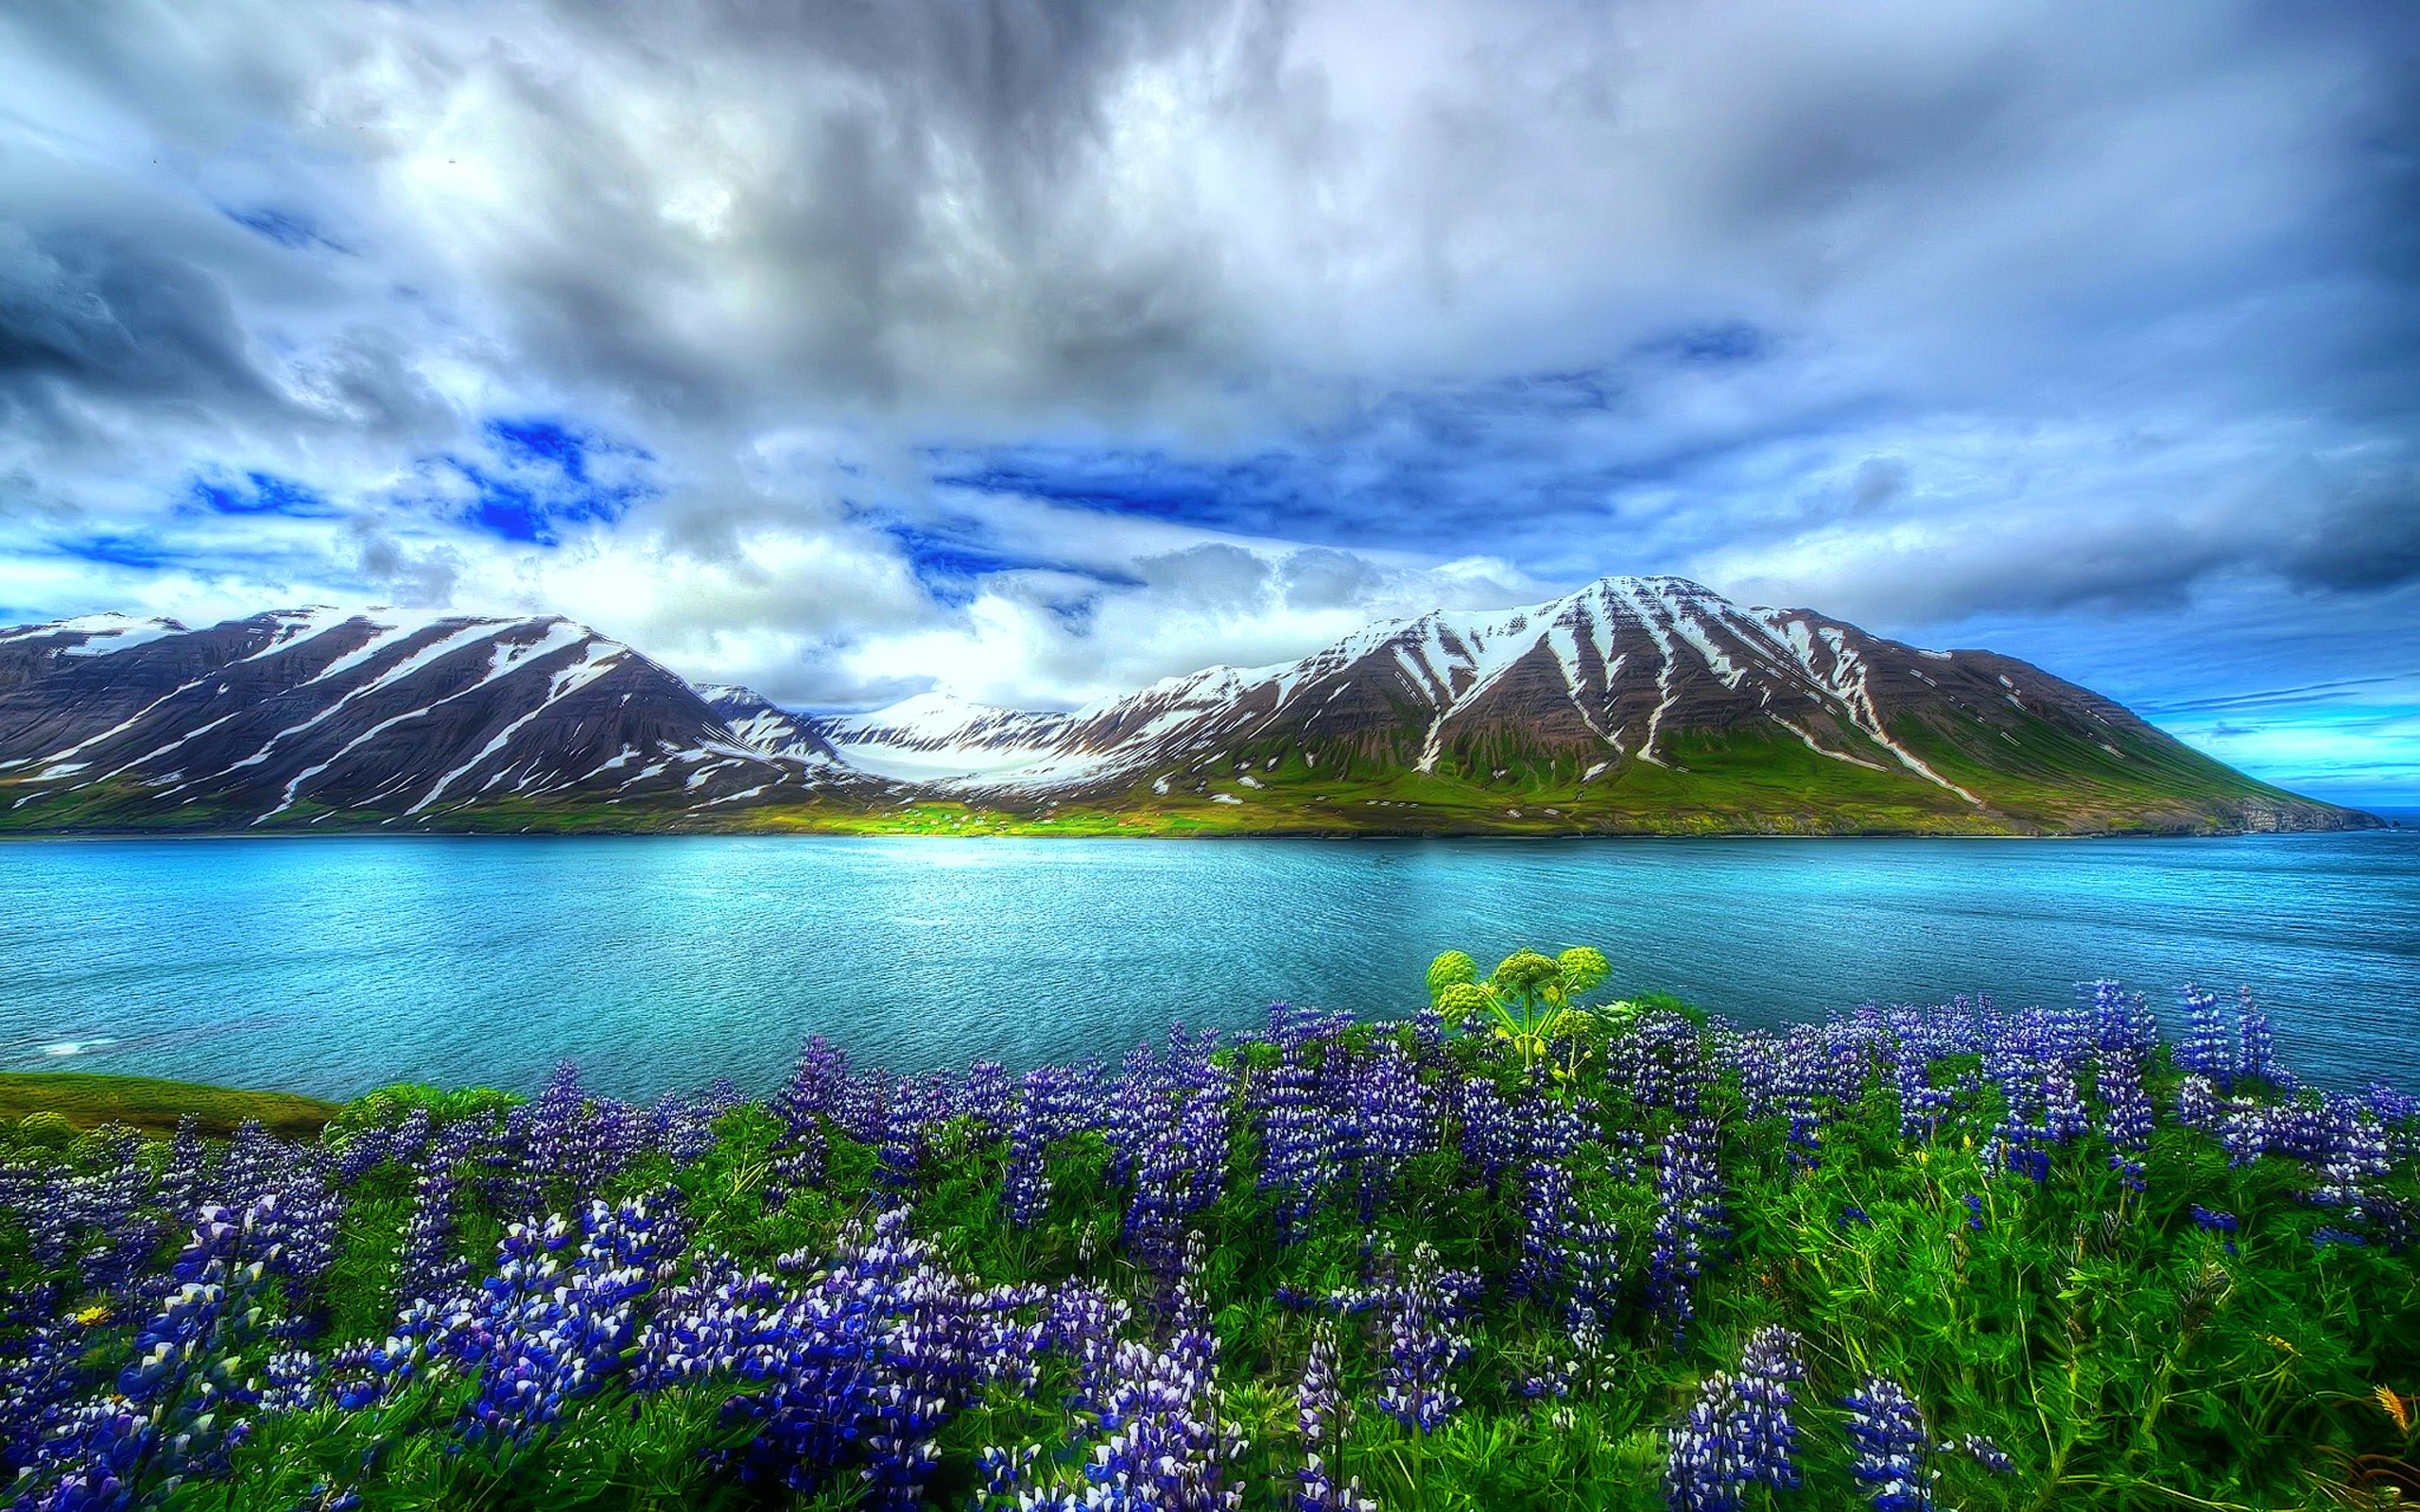 Nature Beautiful Hd Wallpaper Mountain Lake Flowers Sky